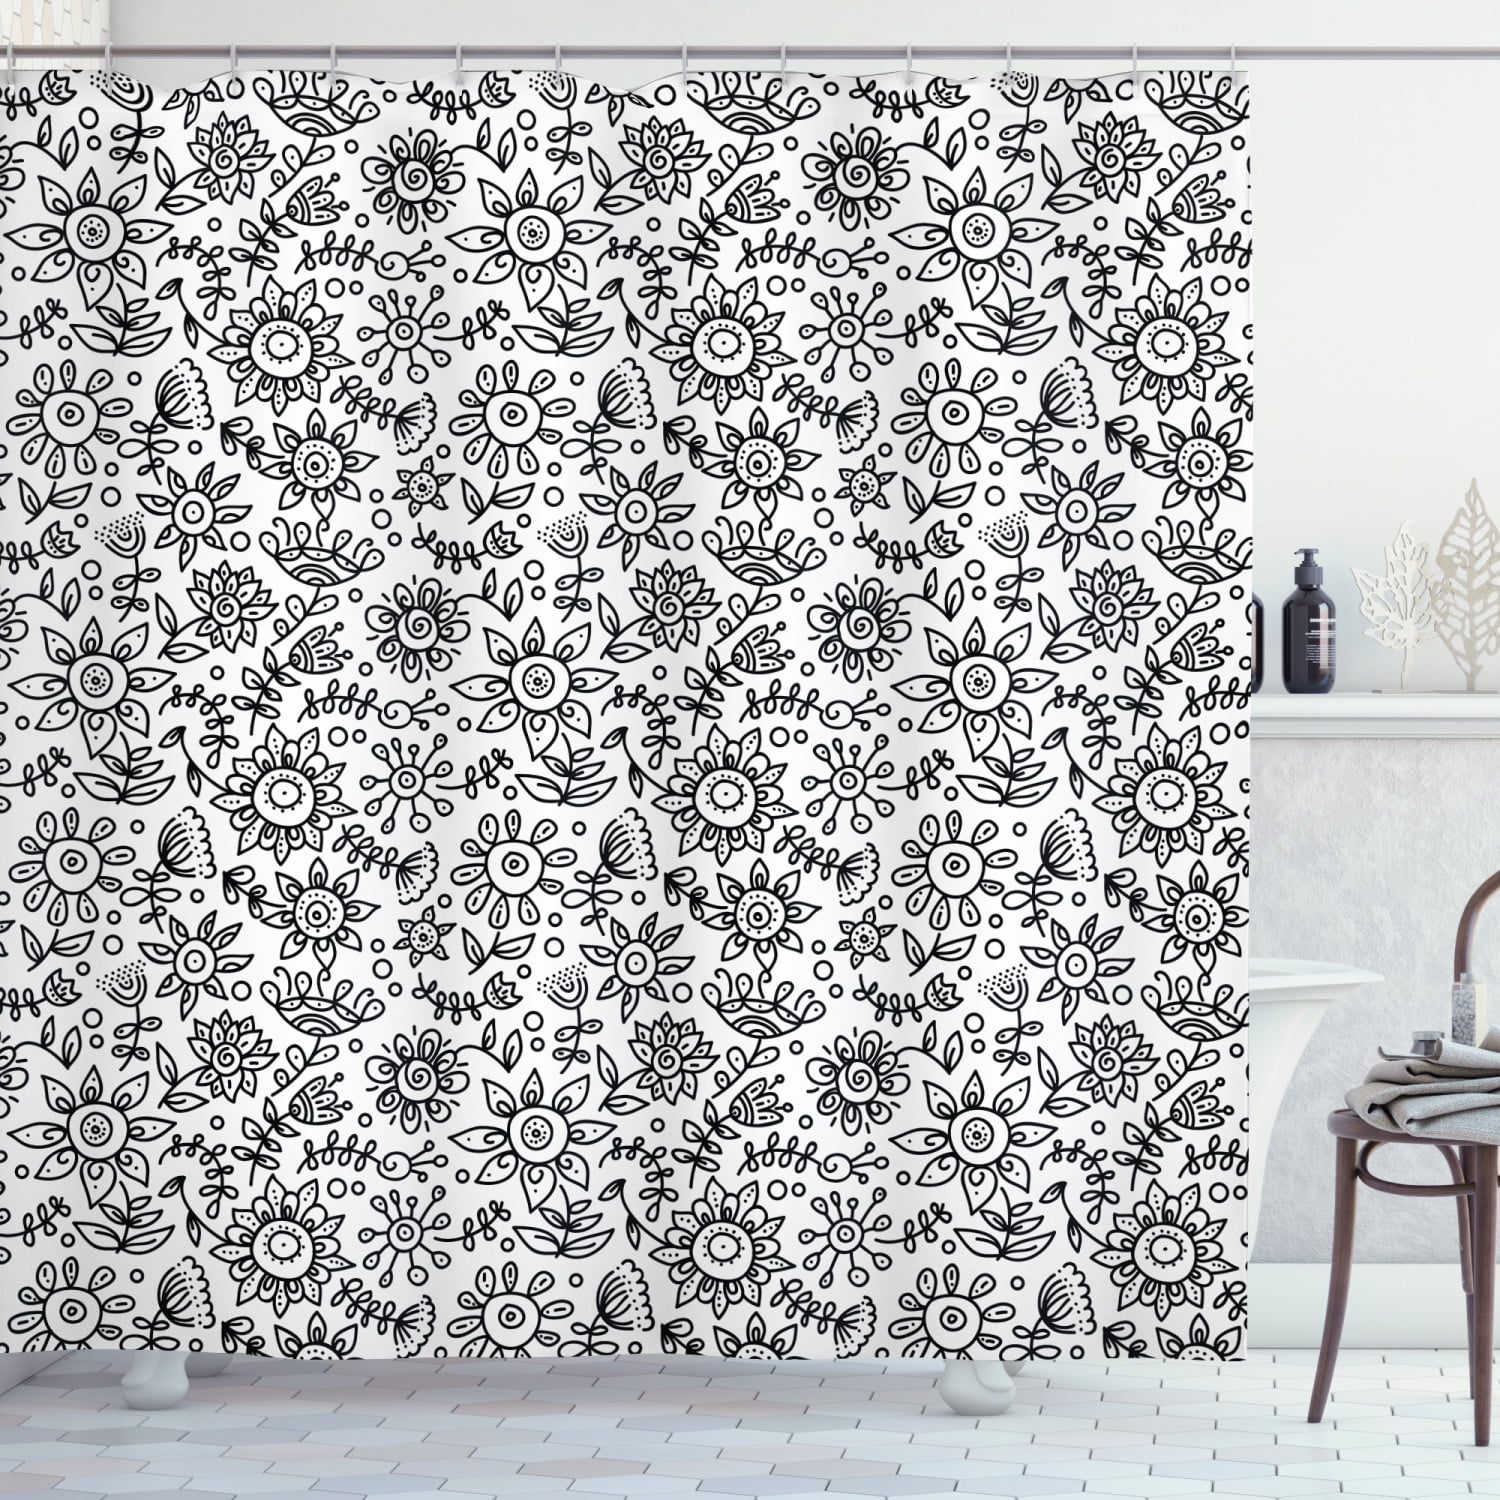 Details about   Sketch Style Spring Floral Twigs White & Black Shower Curtain Set Bathroom Decor 